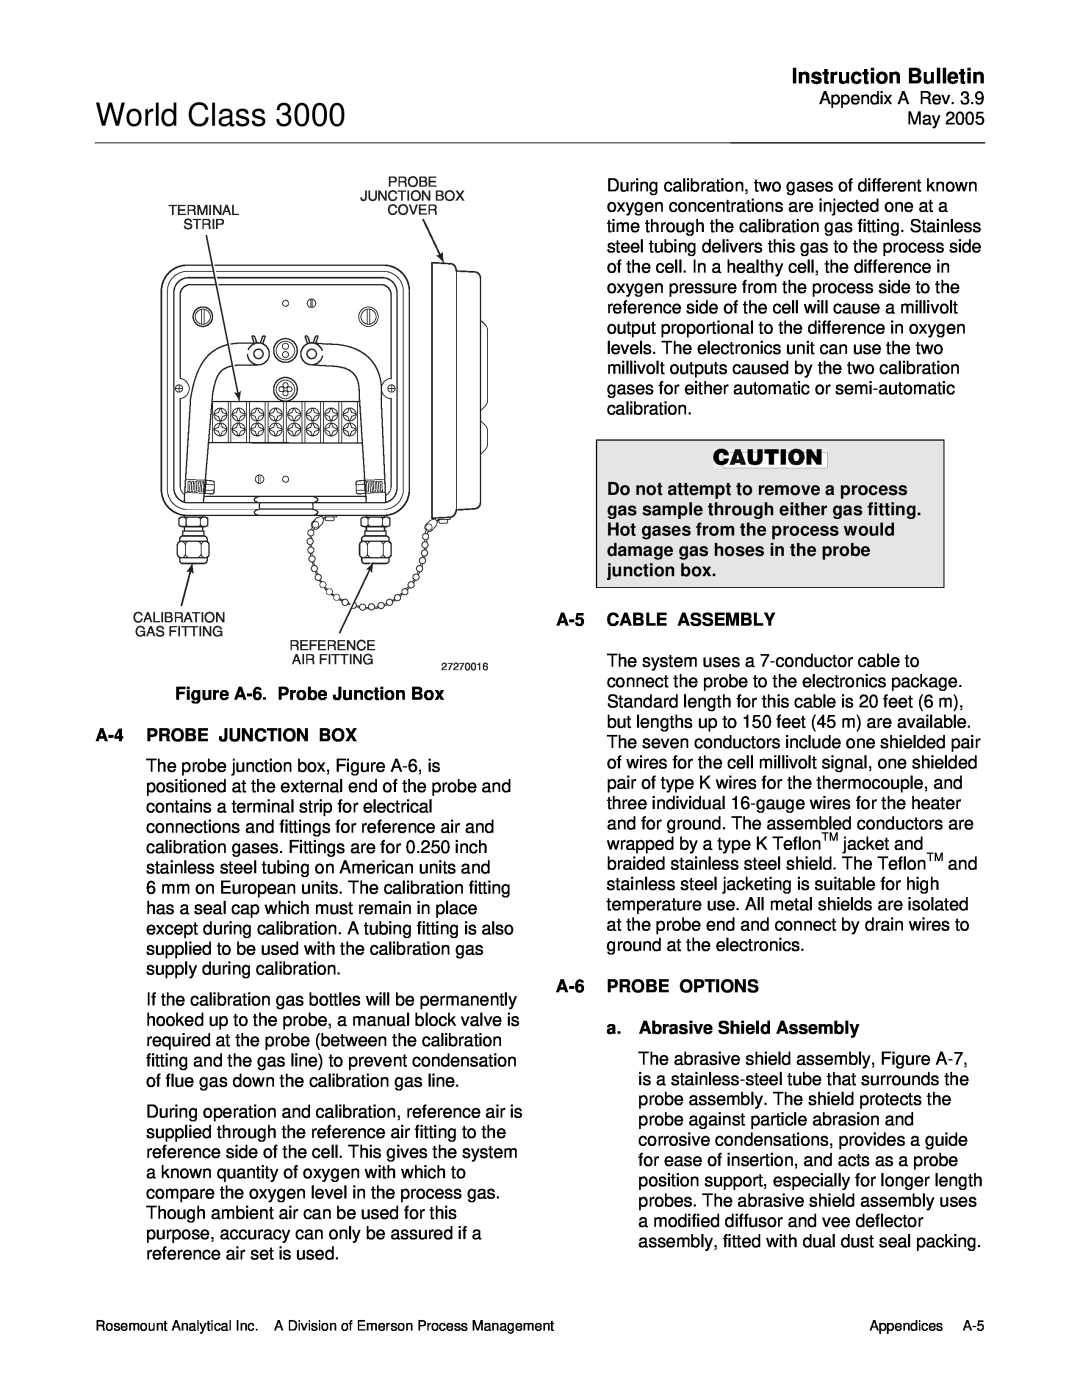 Emerson 3000 World Class, Instruction Bulletin, Figure A-6.Probe Junction Box, A-4PROBE JUNCTION BOX, A-5CABLE ASSEMBLY 